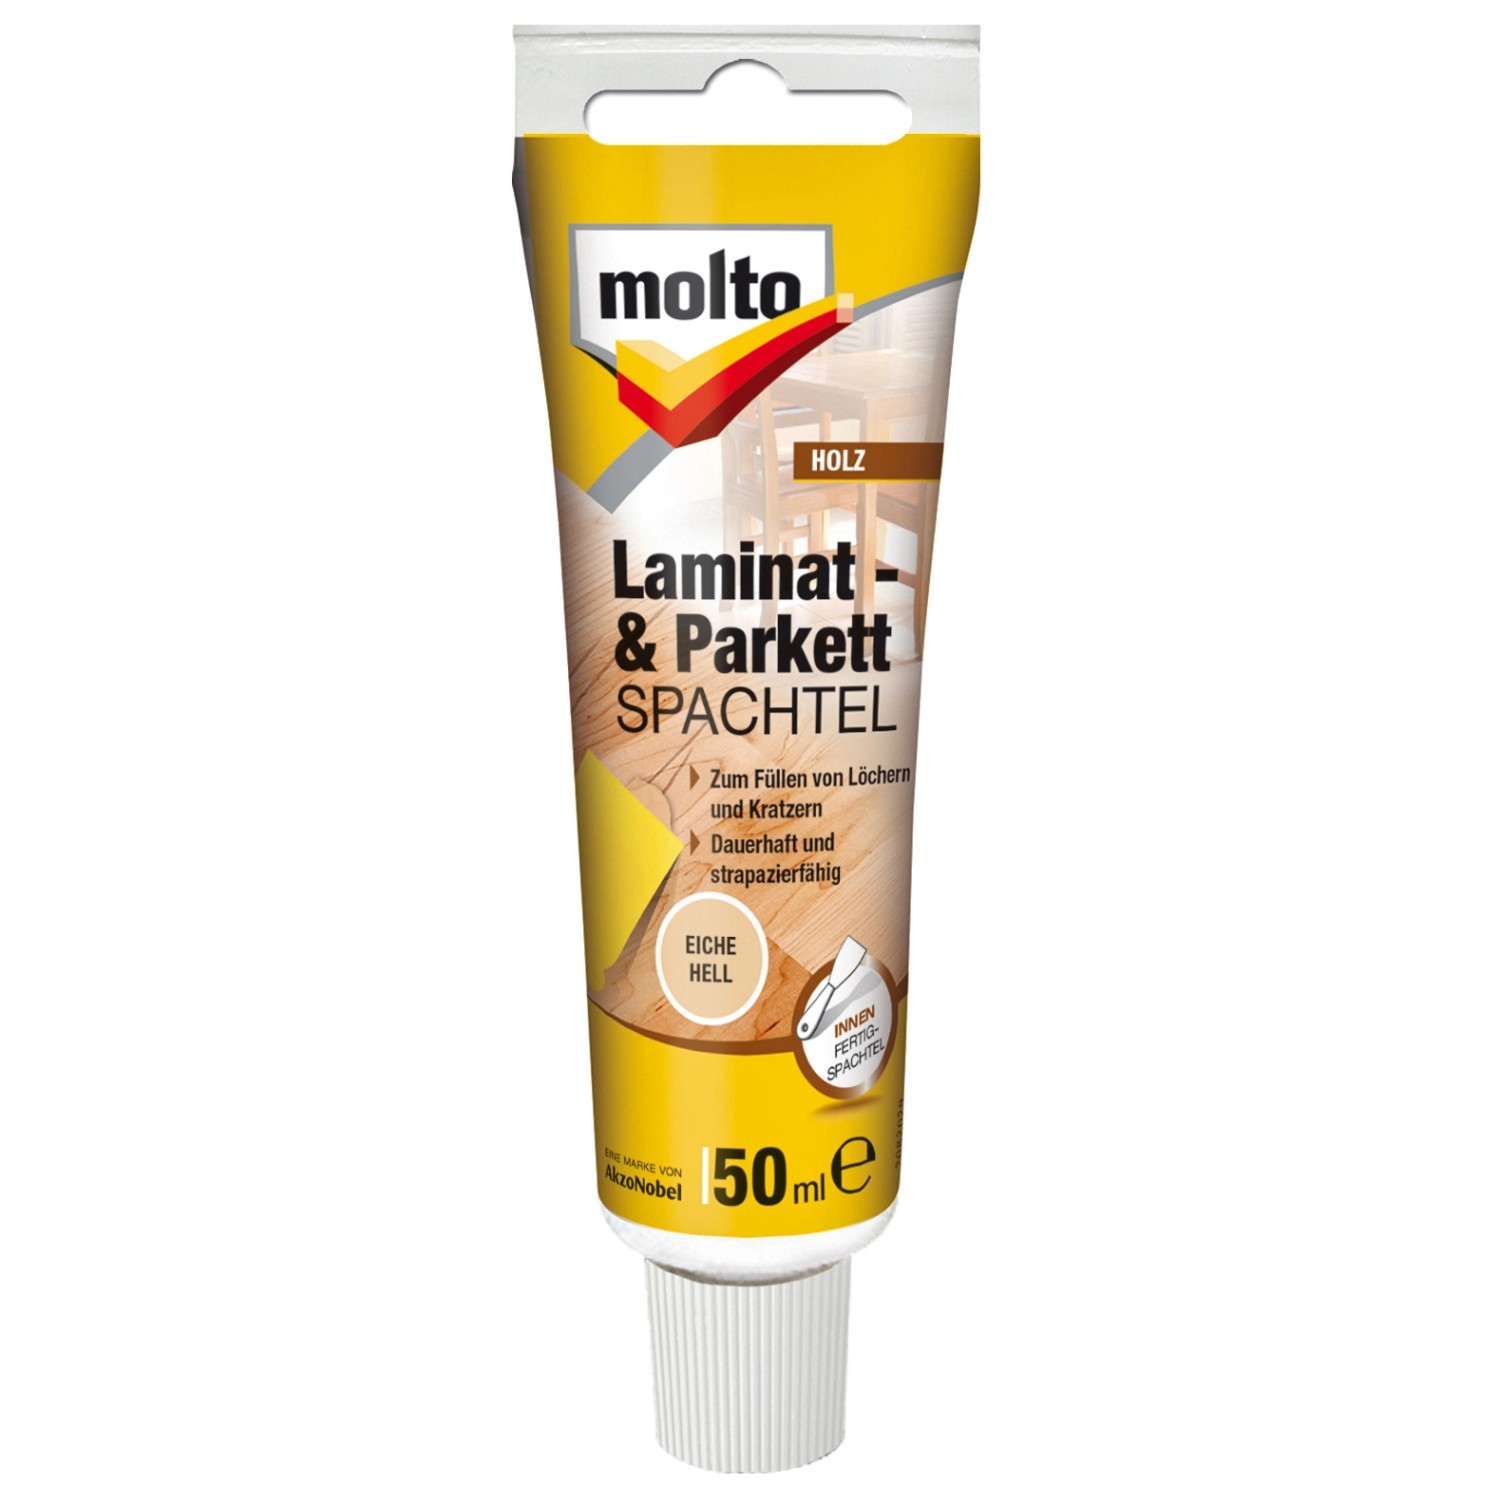 Molto Laminat- & Parkettspachtel Eiche hell 50 ml von Molto